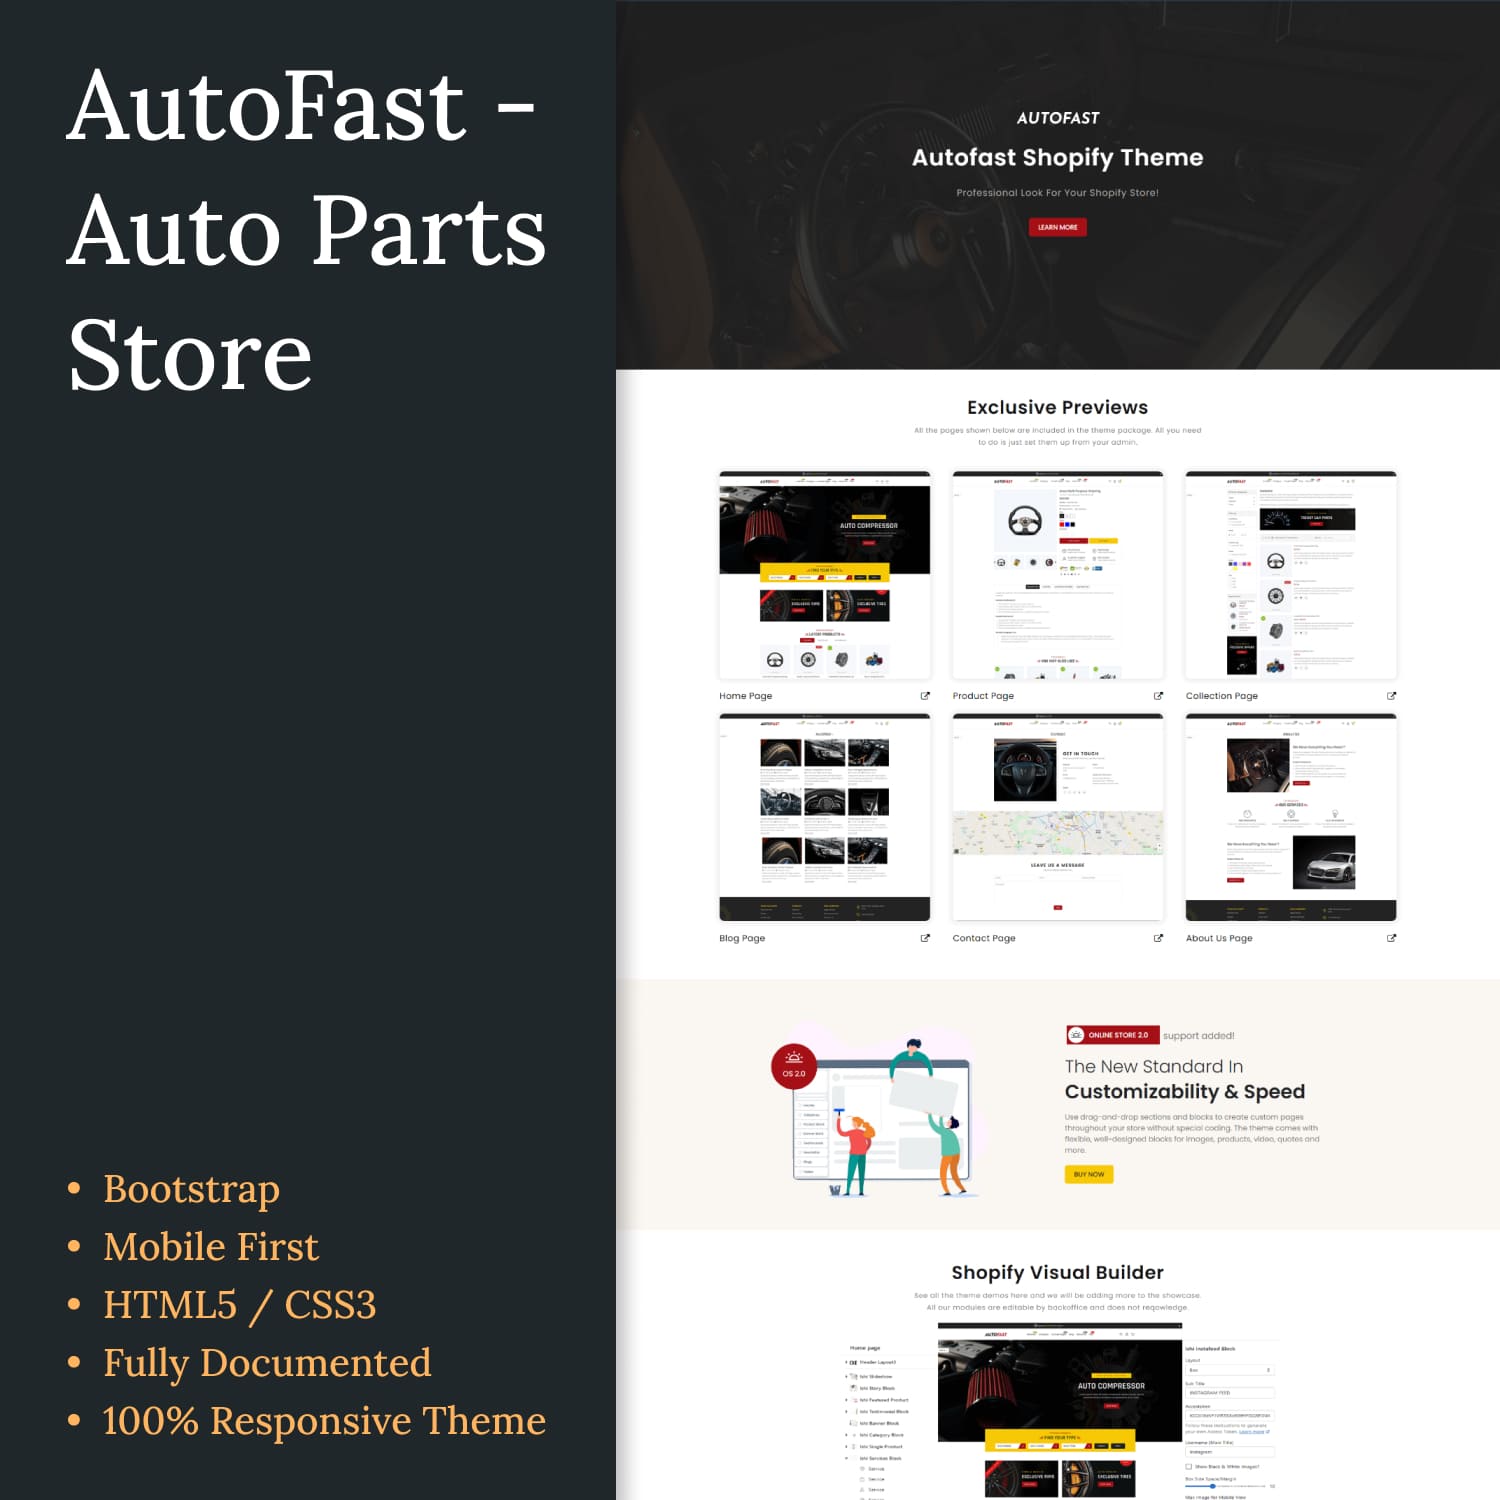 AutoFast Auto Parts Store Shopify Theme.